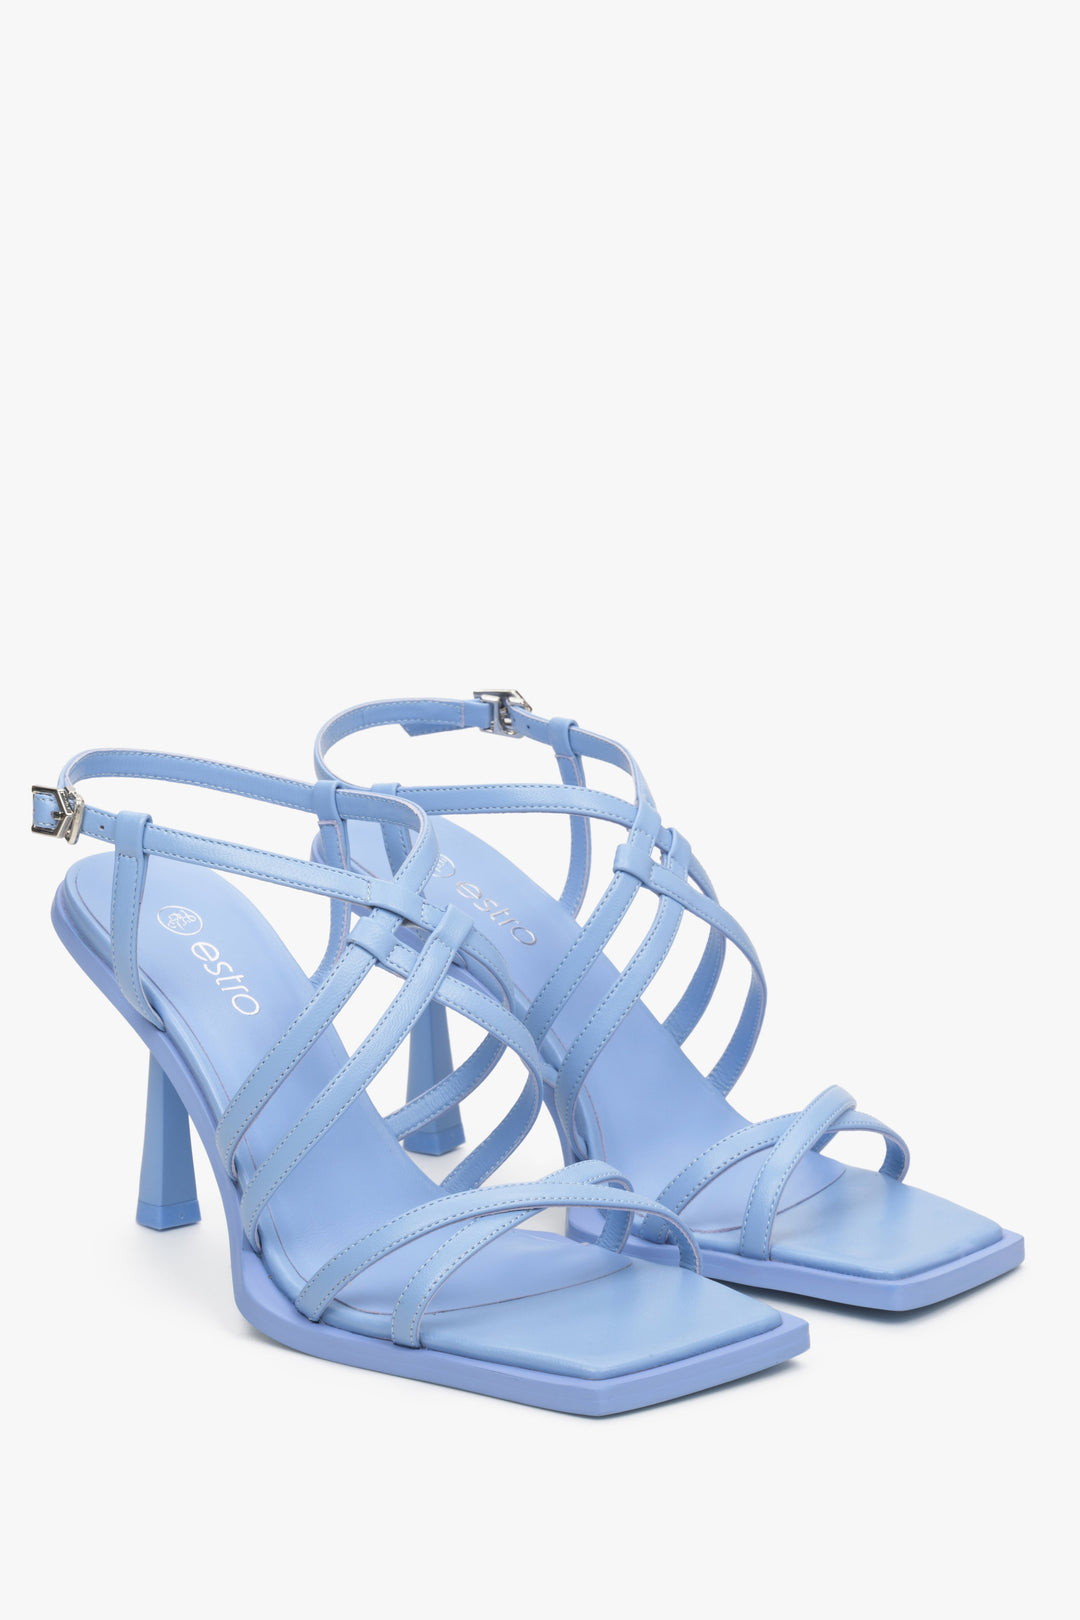 Light blue women's strappy sandals on a funnel heel, Estro brand.